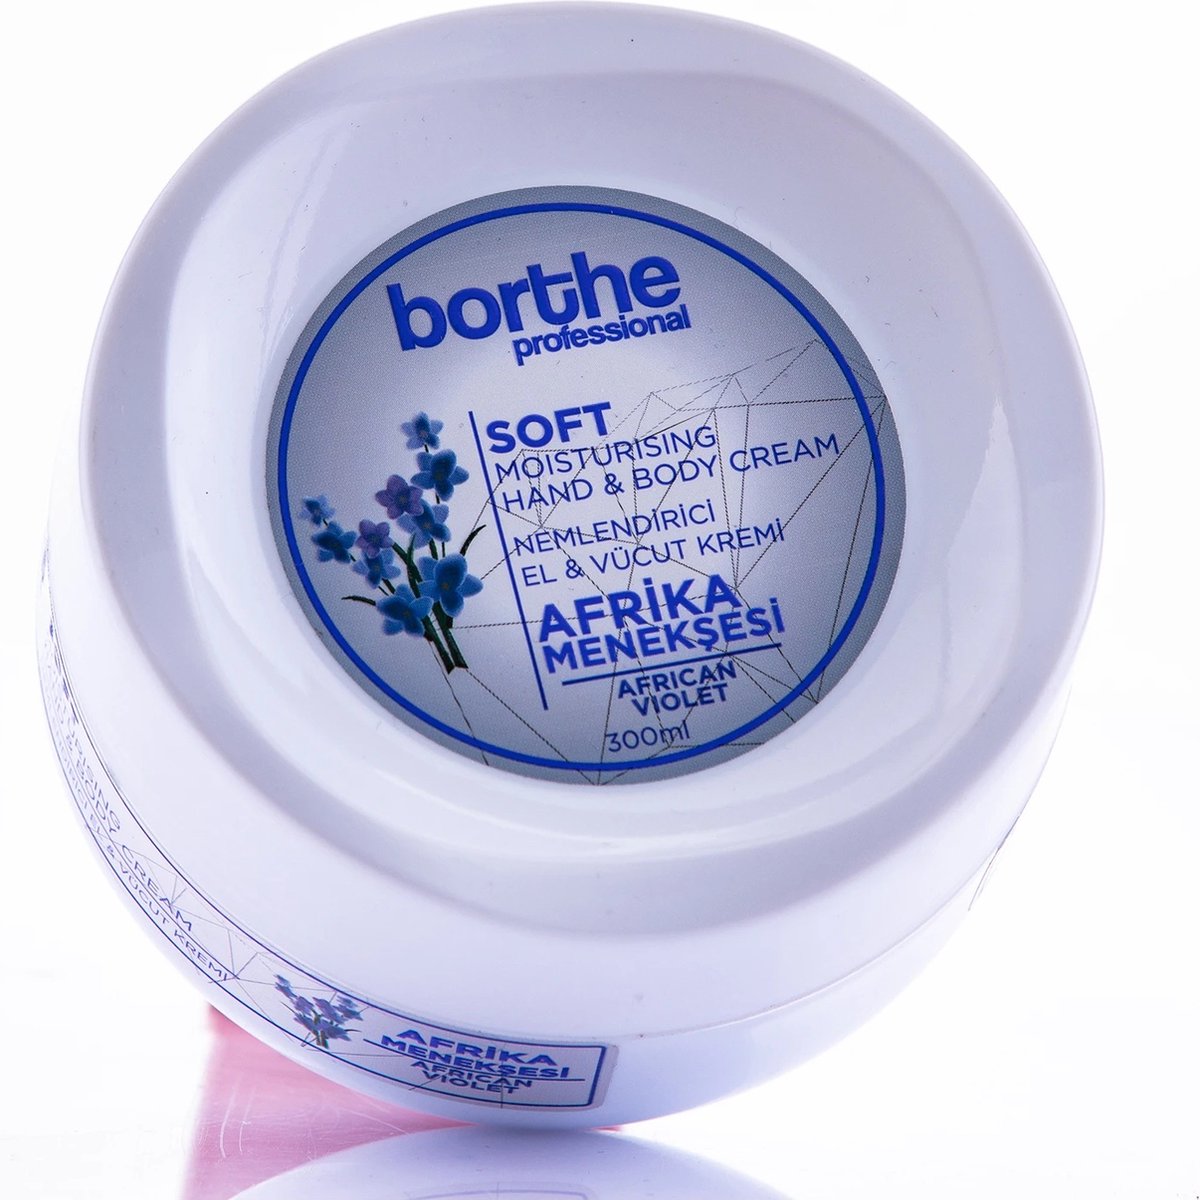 Borthe Professional - Hand & Body creme - 300 ml - African Violet - Hydraterend - Voor droge handen